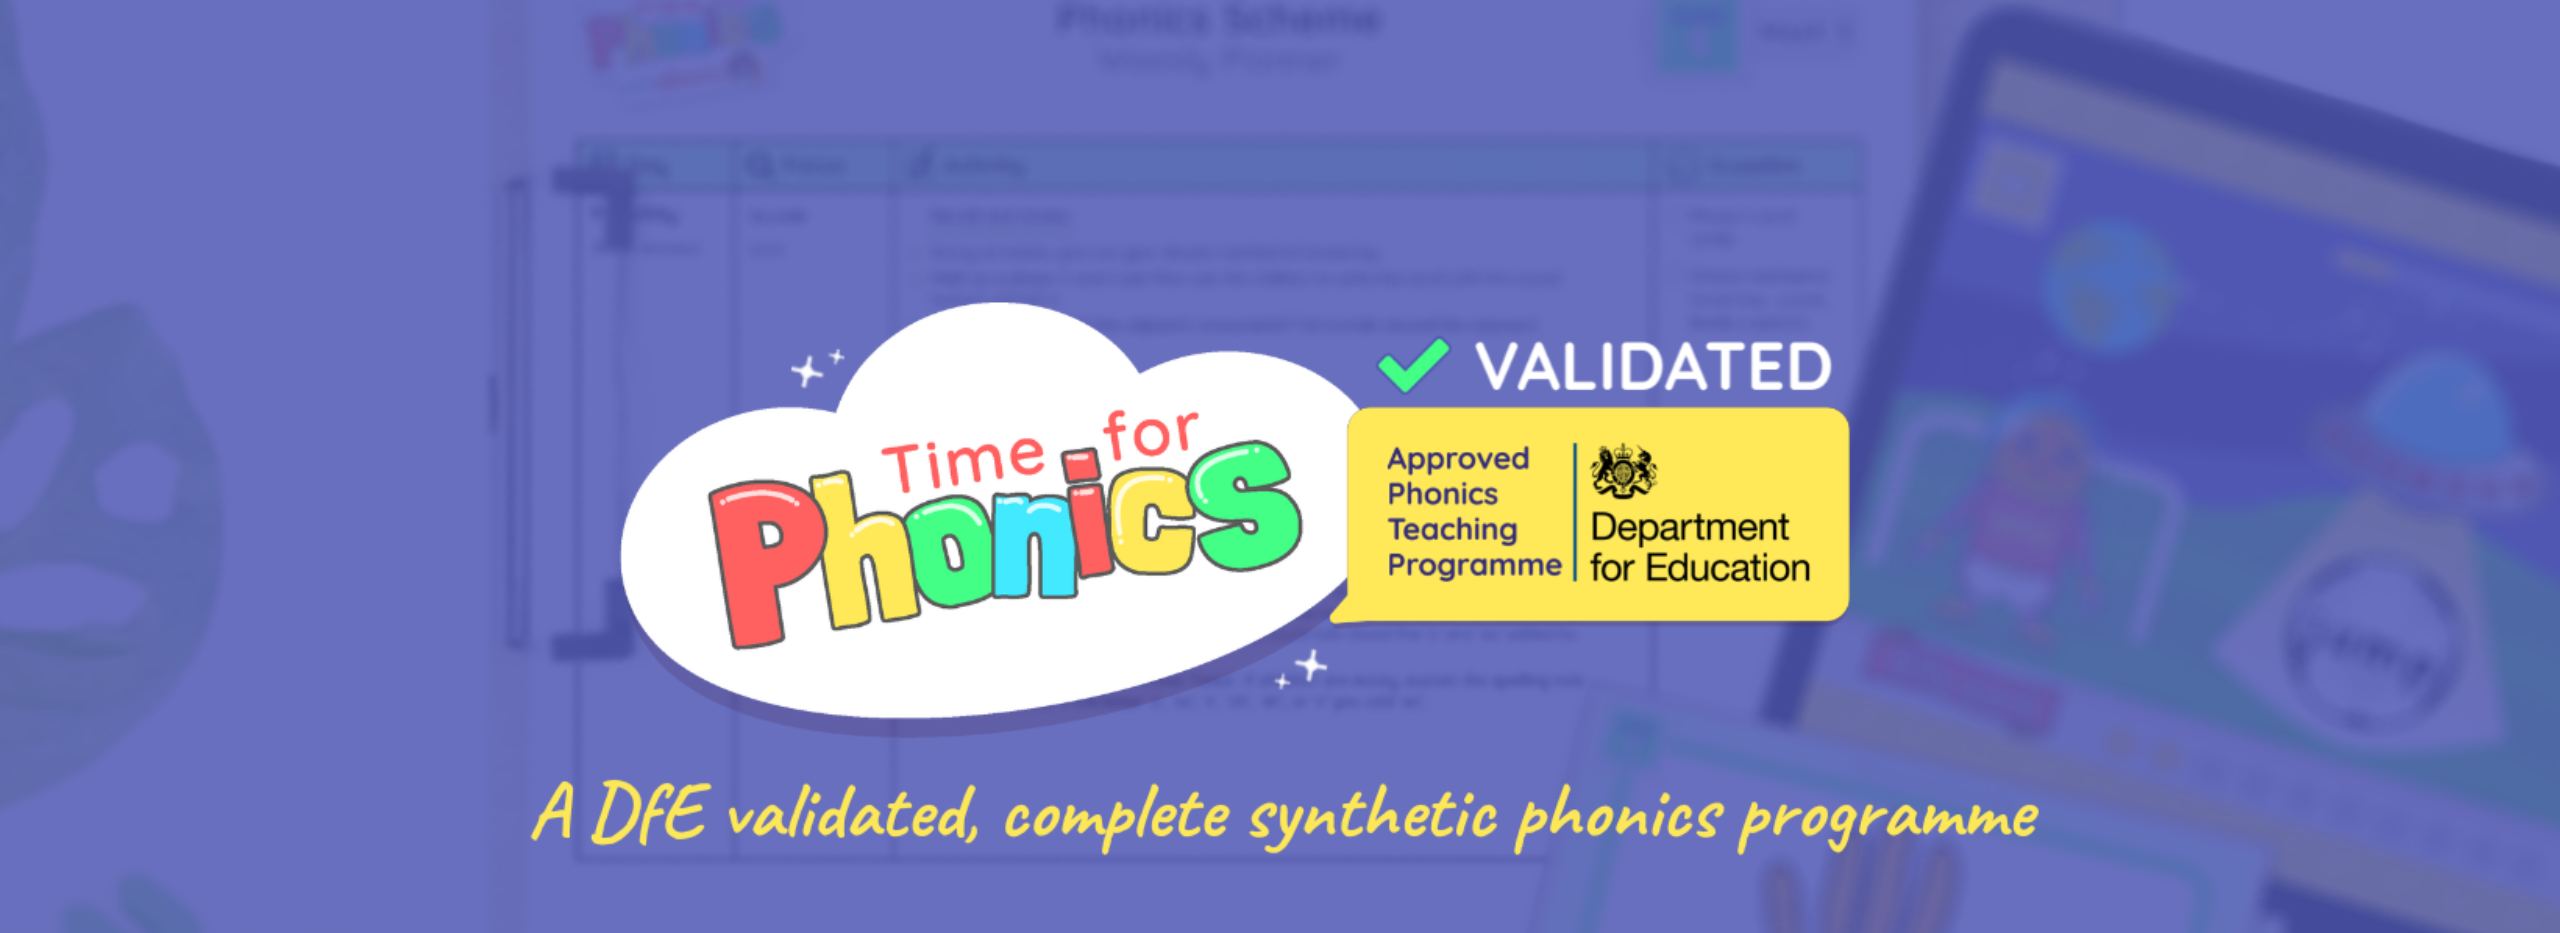 validated DfE phonics programme